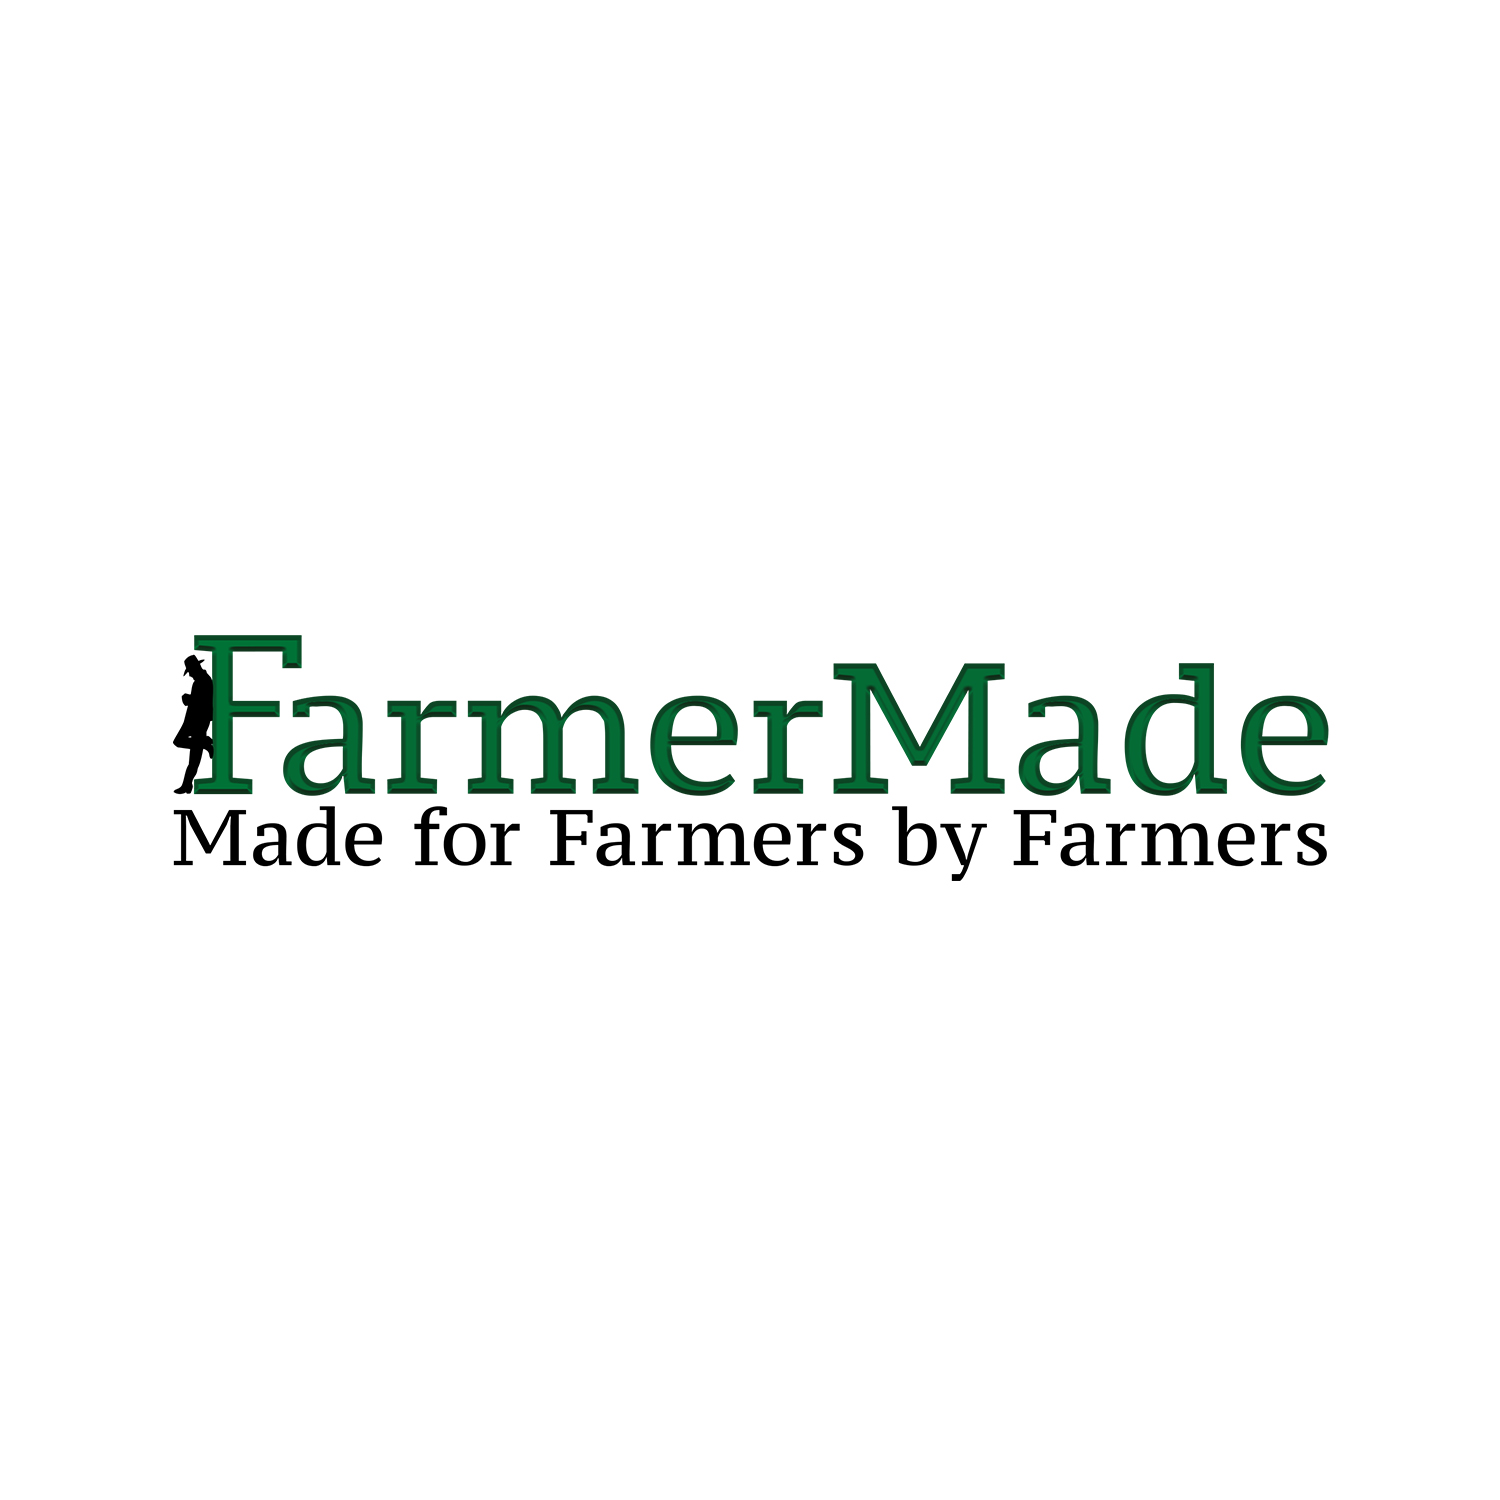 FarmerMade Facebook